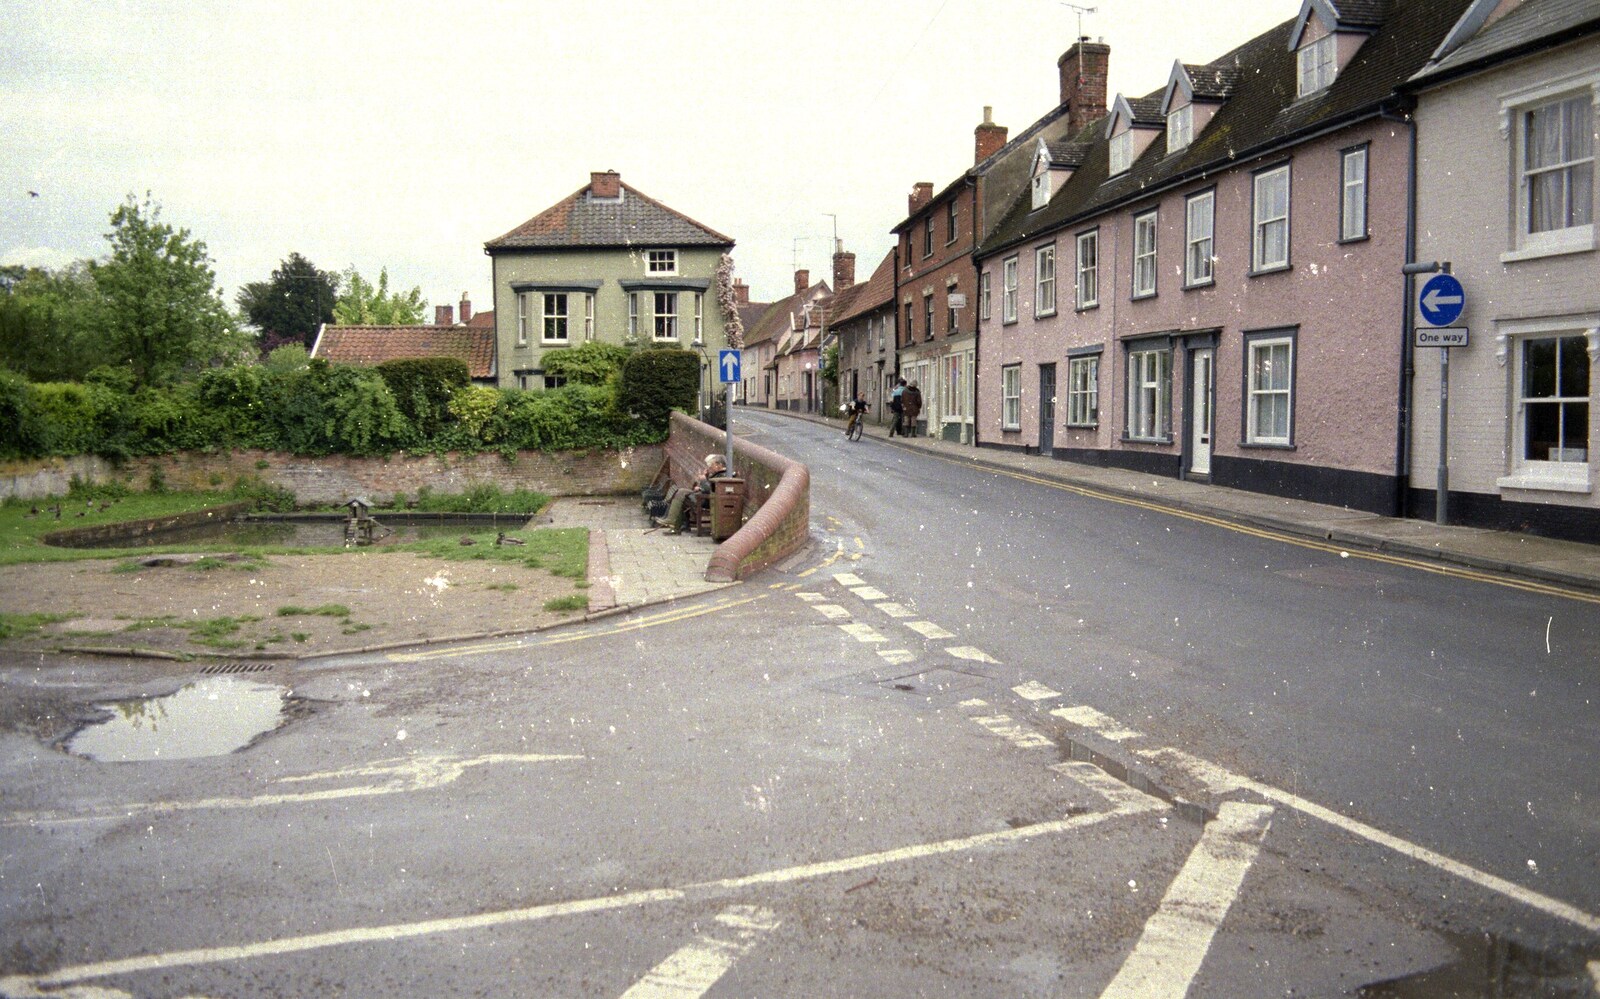 Framlingham, near the castle entrance from House Renovation Randomness and a Spot of Lightning, Brome, Suffolk - 19th June 1994